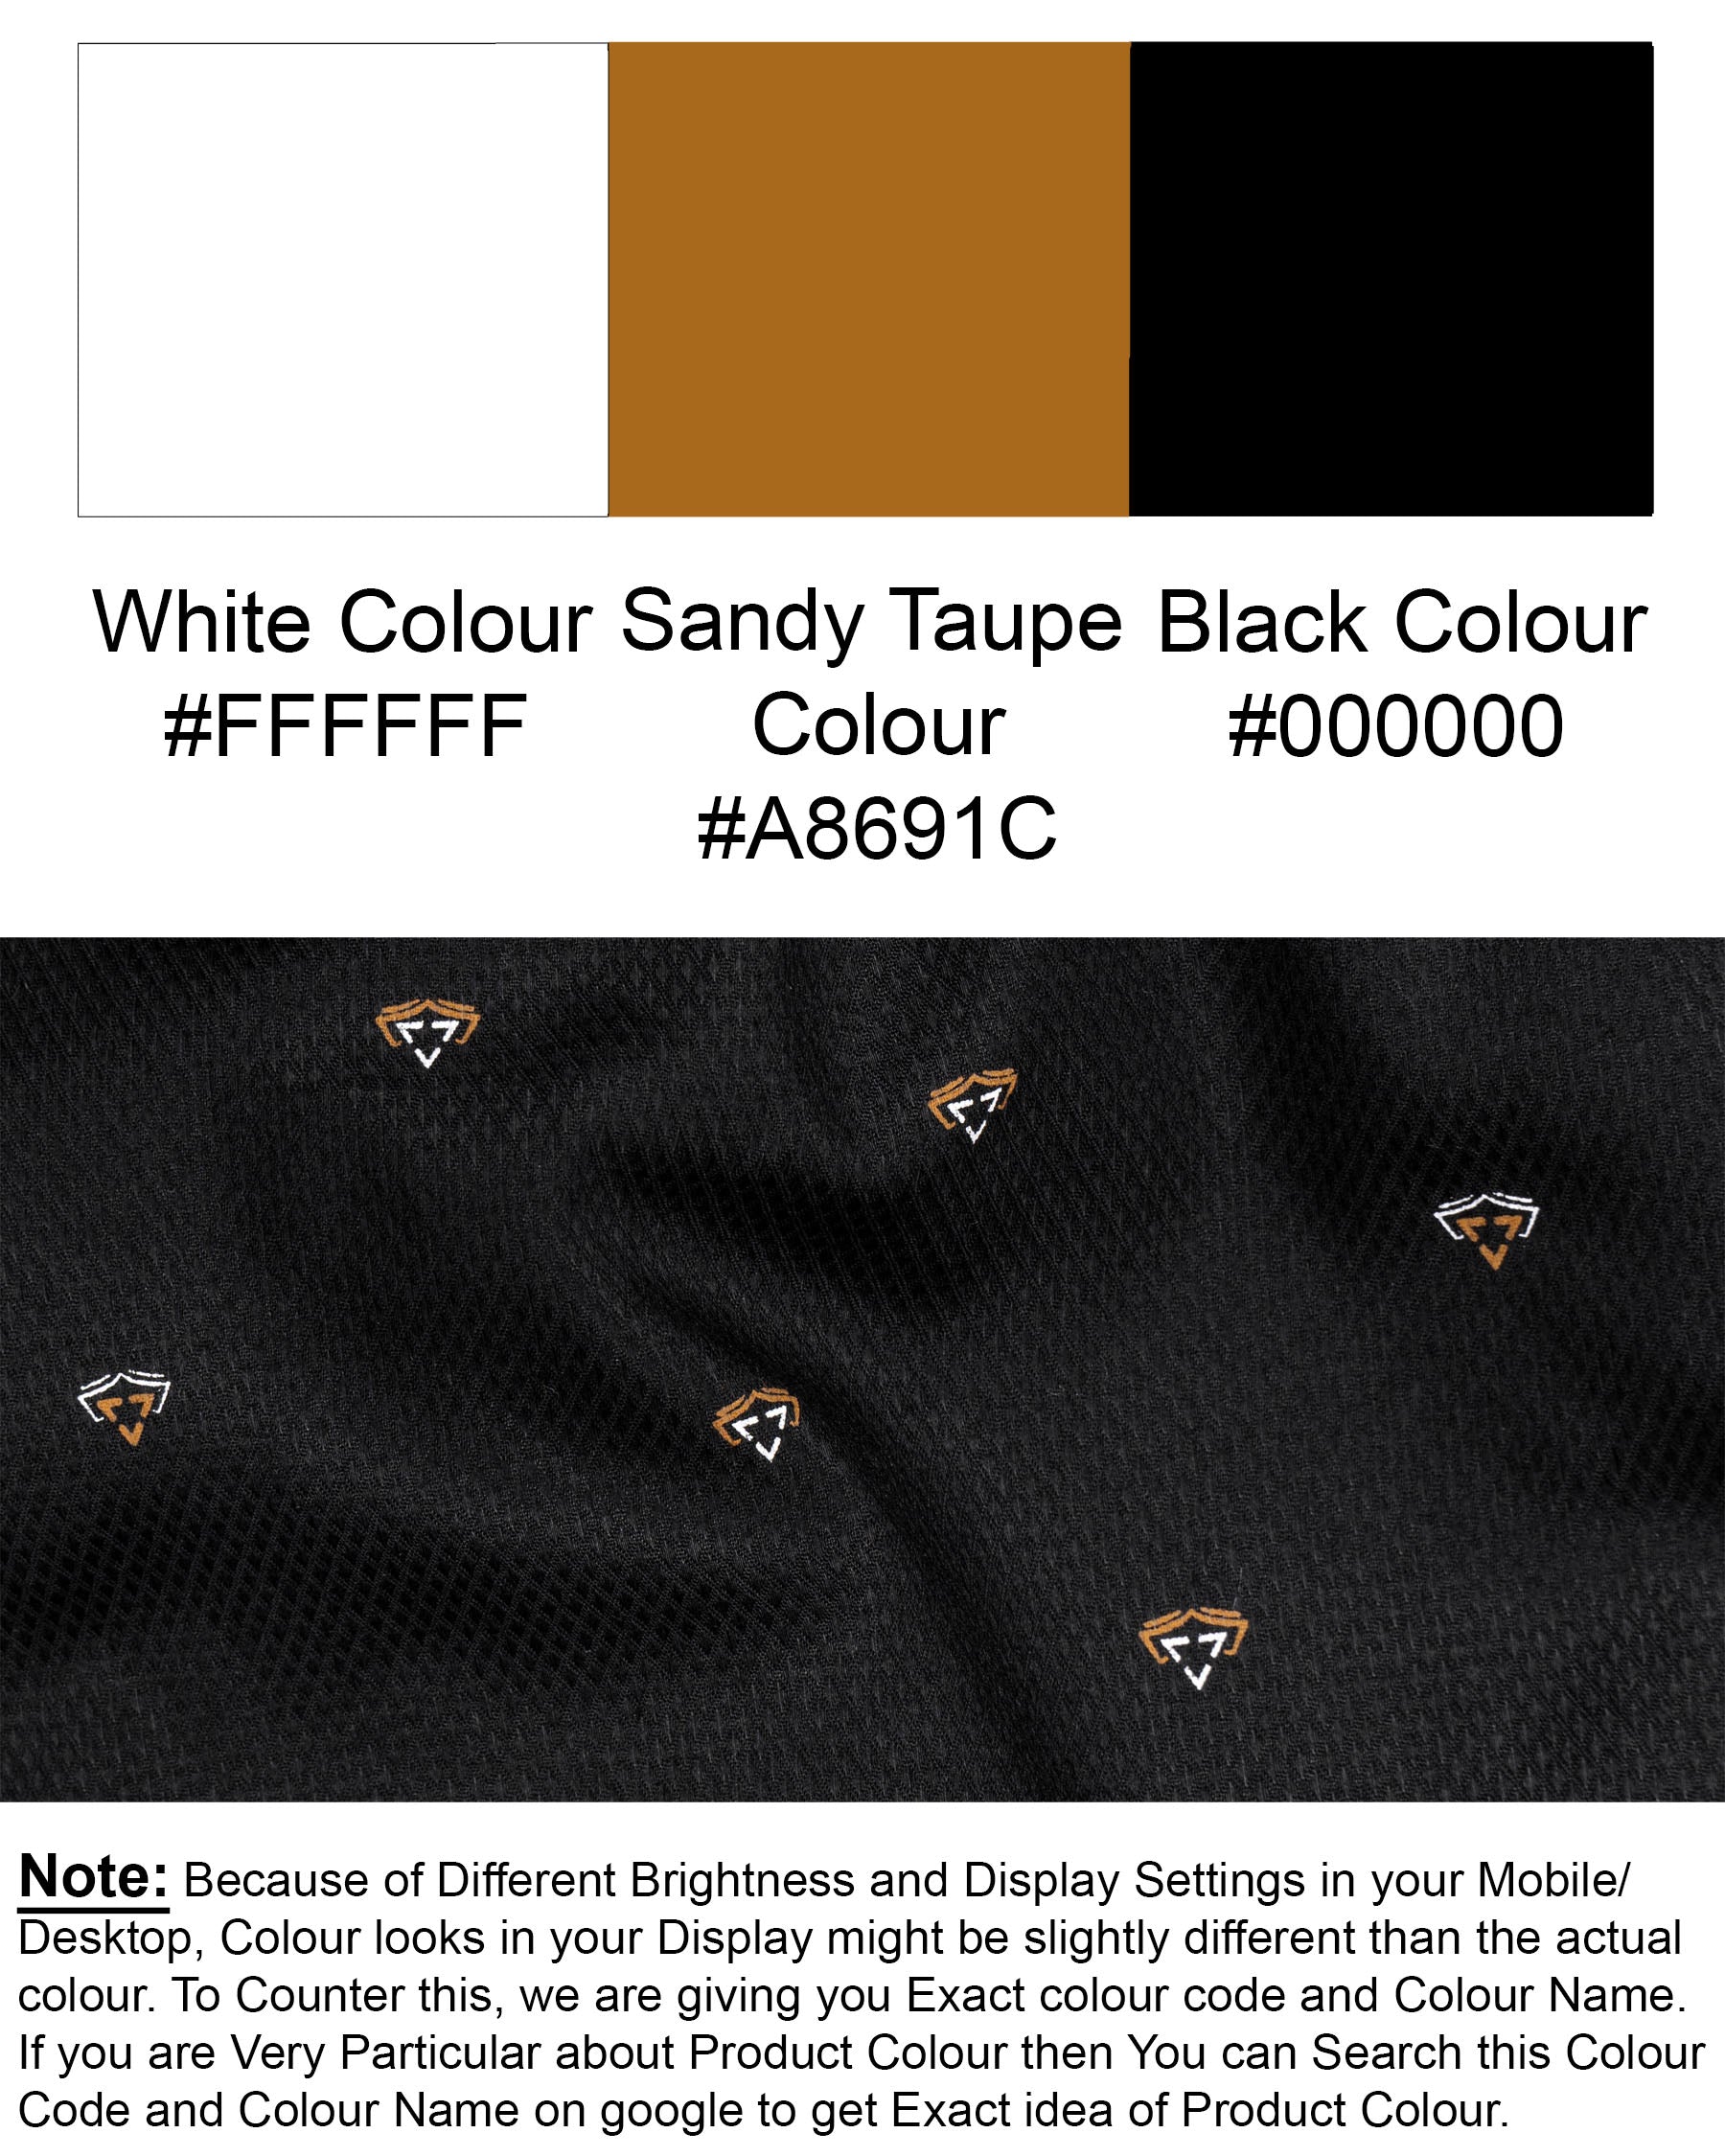 Sandy Taupe and Black Printed Dobby Textured Premium Cotton Shirt 6994-BLK-38, 6994-BLK-H-38, 6994-BLK-39, 6994-BLK-H-39, 6994-BLK-40, 6994-BLK-H-40, 6994-BLK-42, 6994-BLK-H-42, 6994-BLK-44, 6994-BLK-H-44, 6994-BLK-46, 6994-BLK-H-46, 6994-BLK-48, 6994-BLK-H-48, 6994-BLK-50, 6994-BLK-H-50, 6994-BLK-52, 6994-BLK-H-52